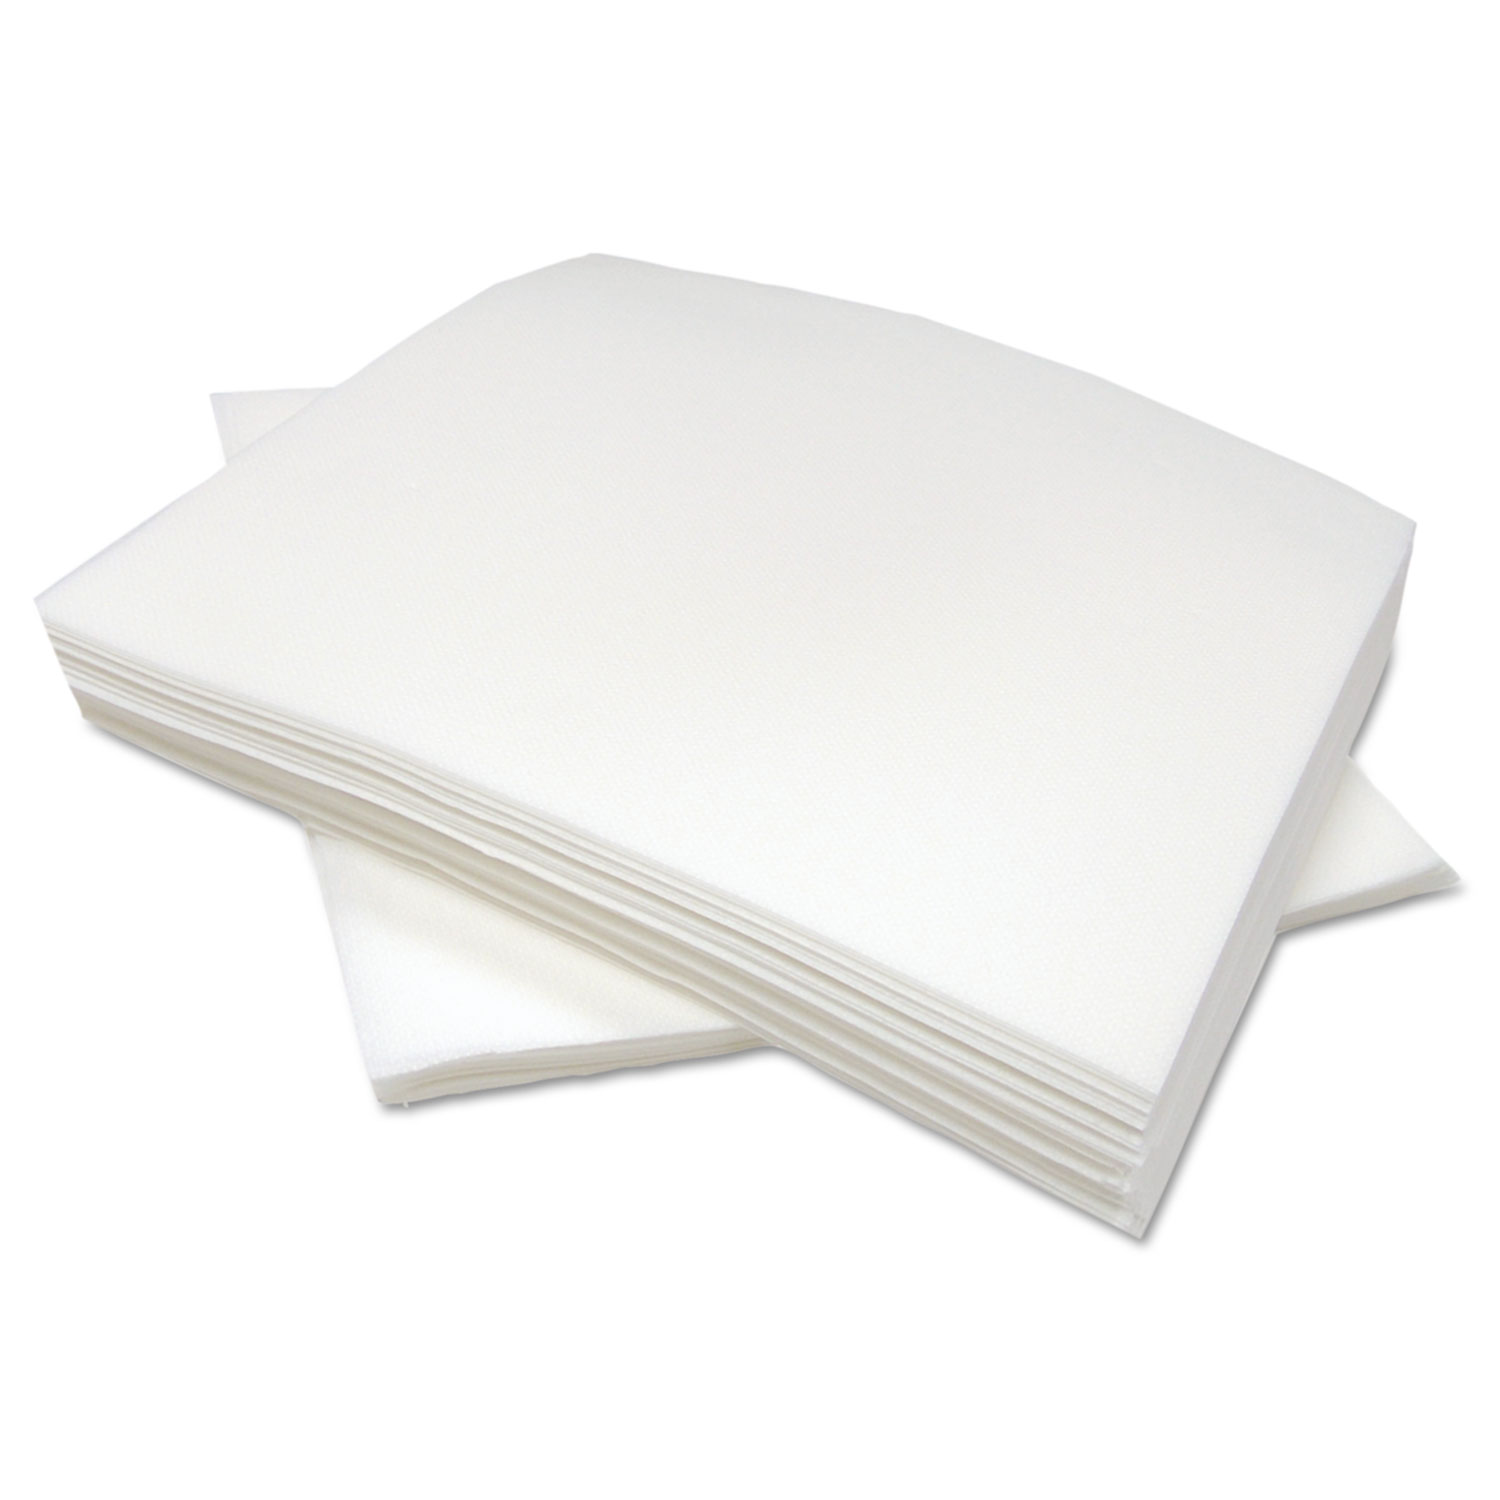  Cascades PRO W310 Tuff-Job Airlaid Wipers, Medium, 12 x 13, White, 900/Carton (CSDW310) 